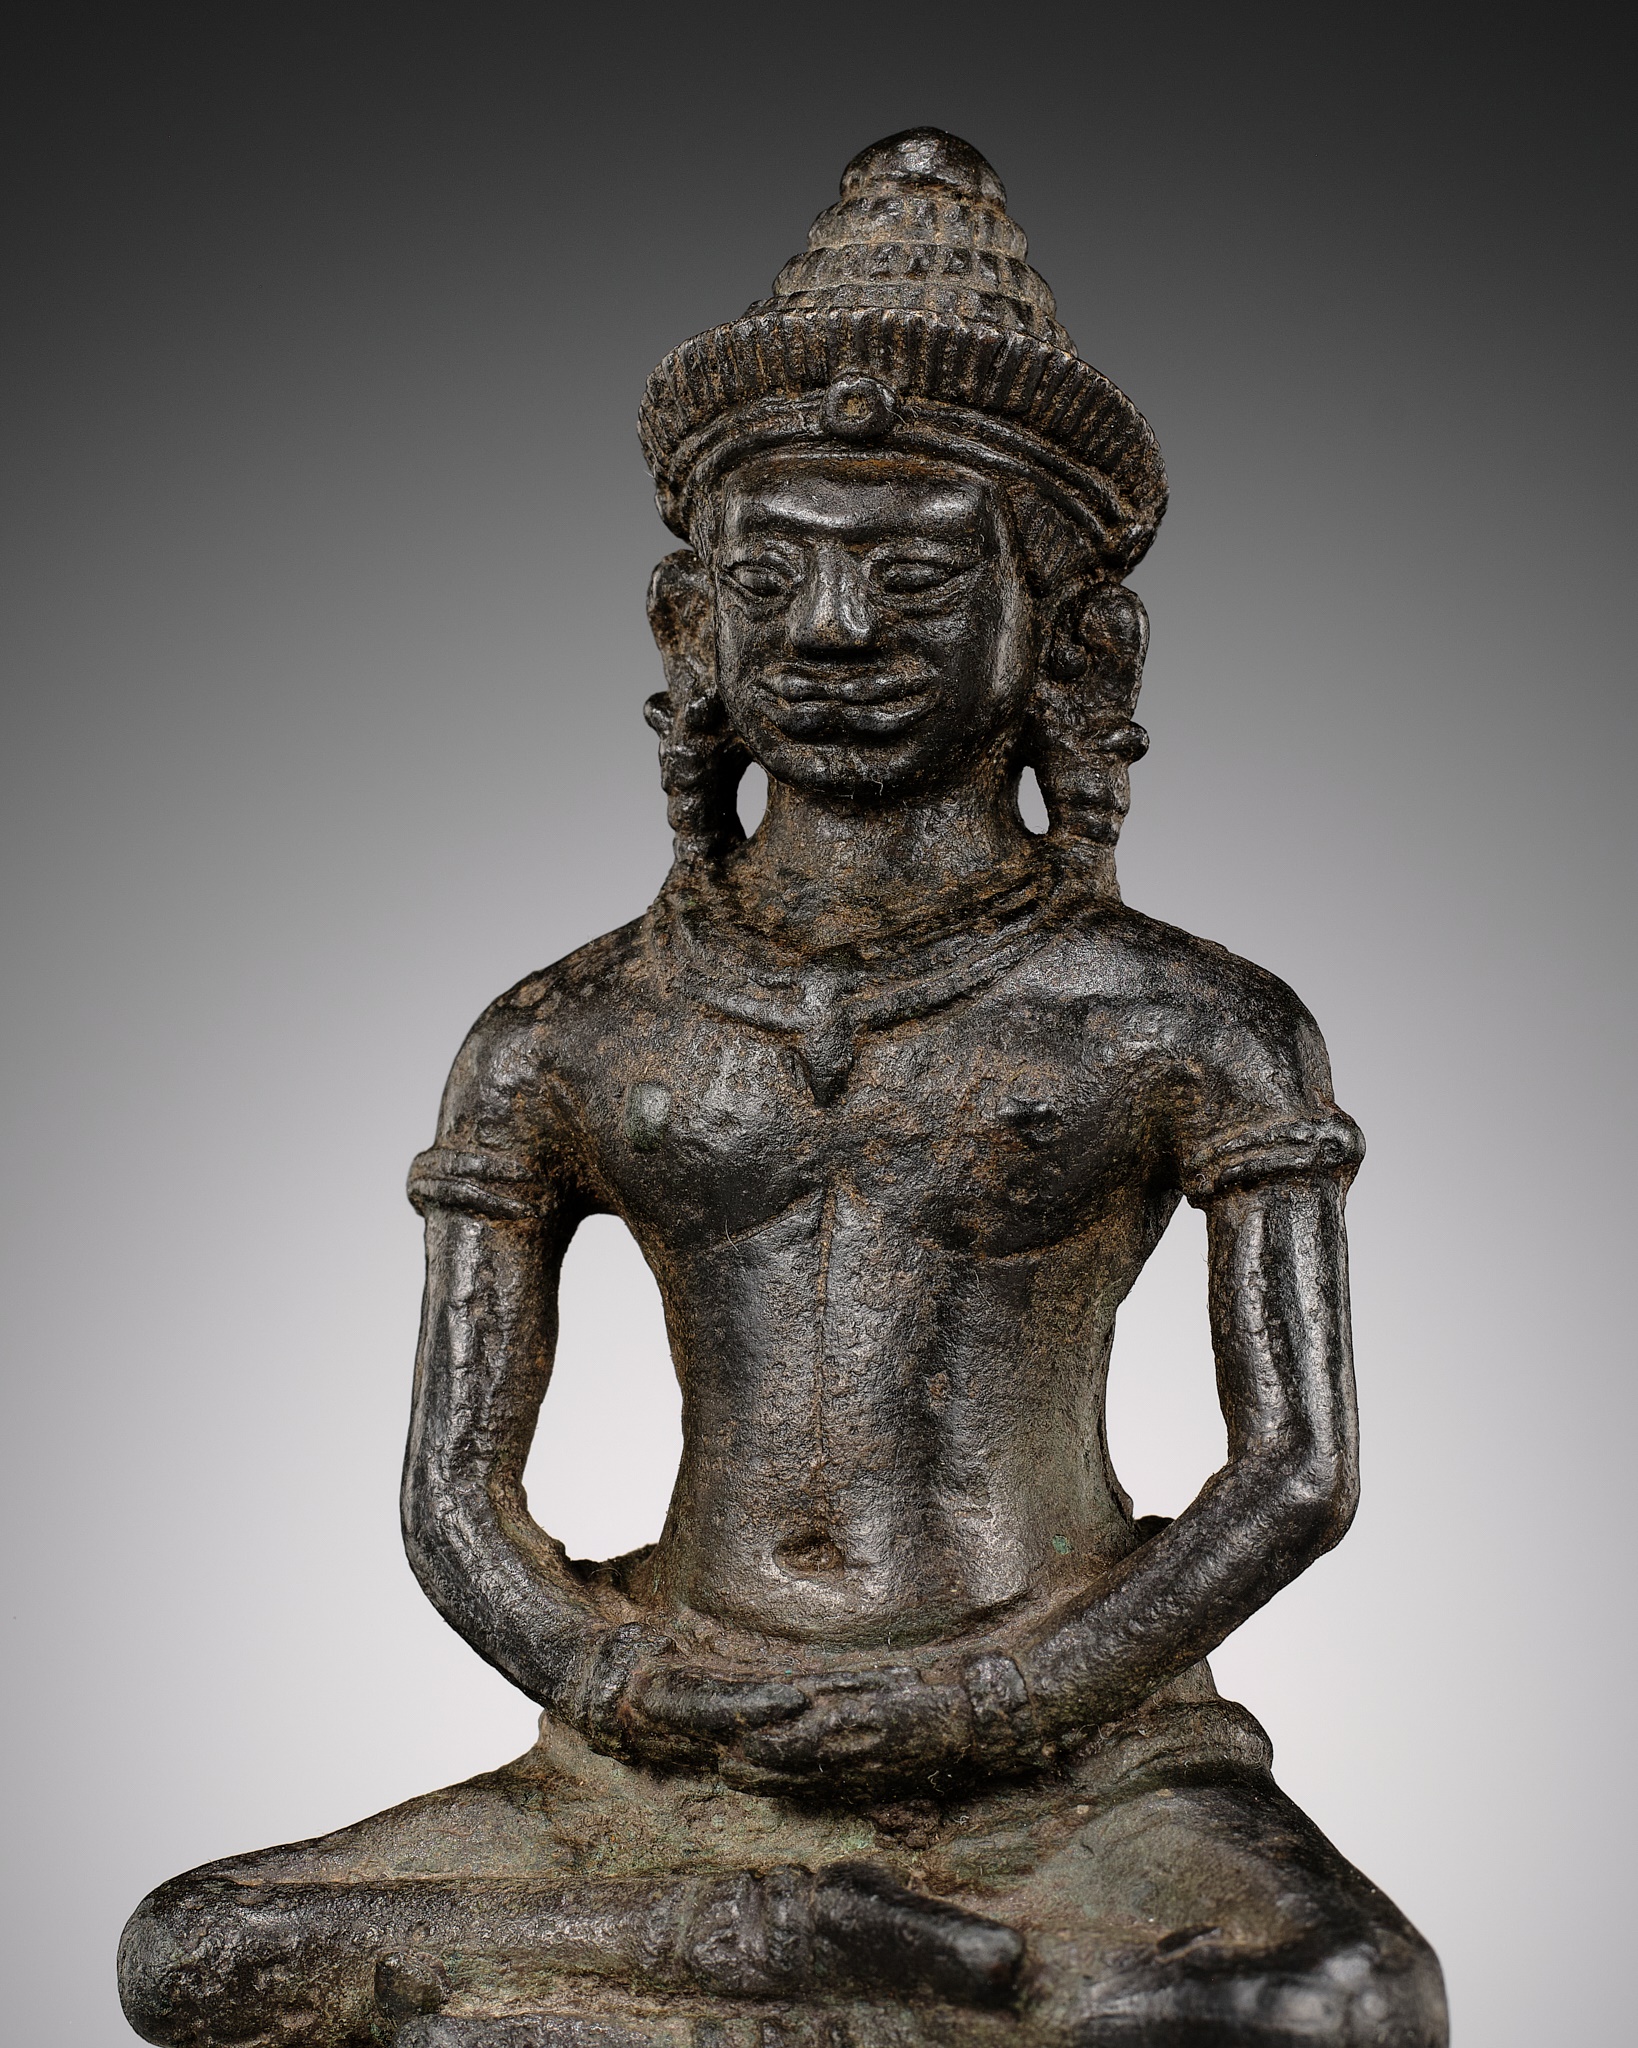 A BRONZE FIGURE OF BUDDHA, ANGKOR PERIOD, KHMER EMPIRE, 12TH CENTURY